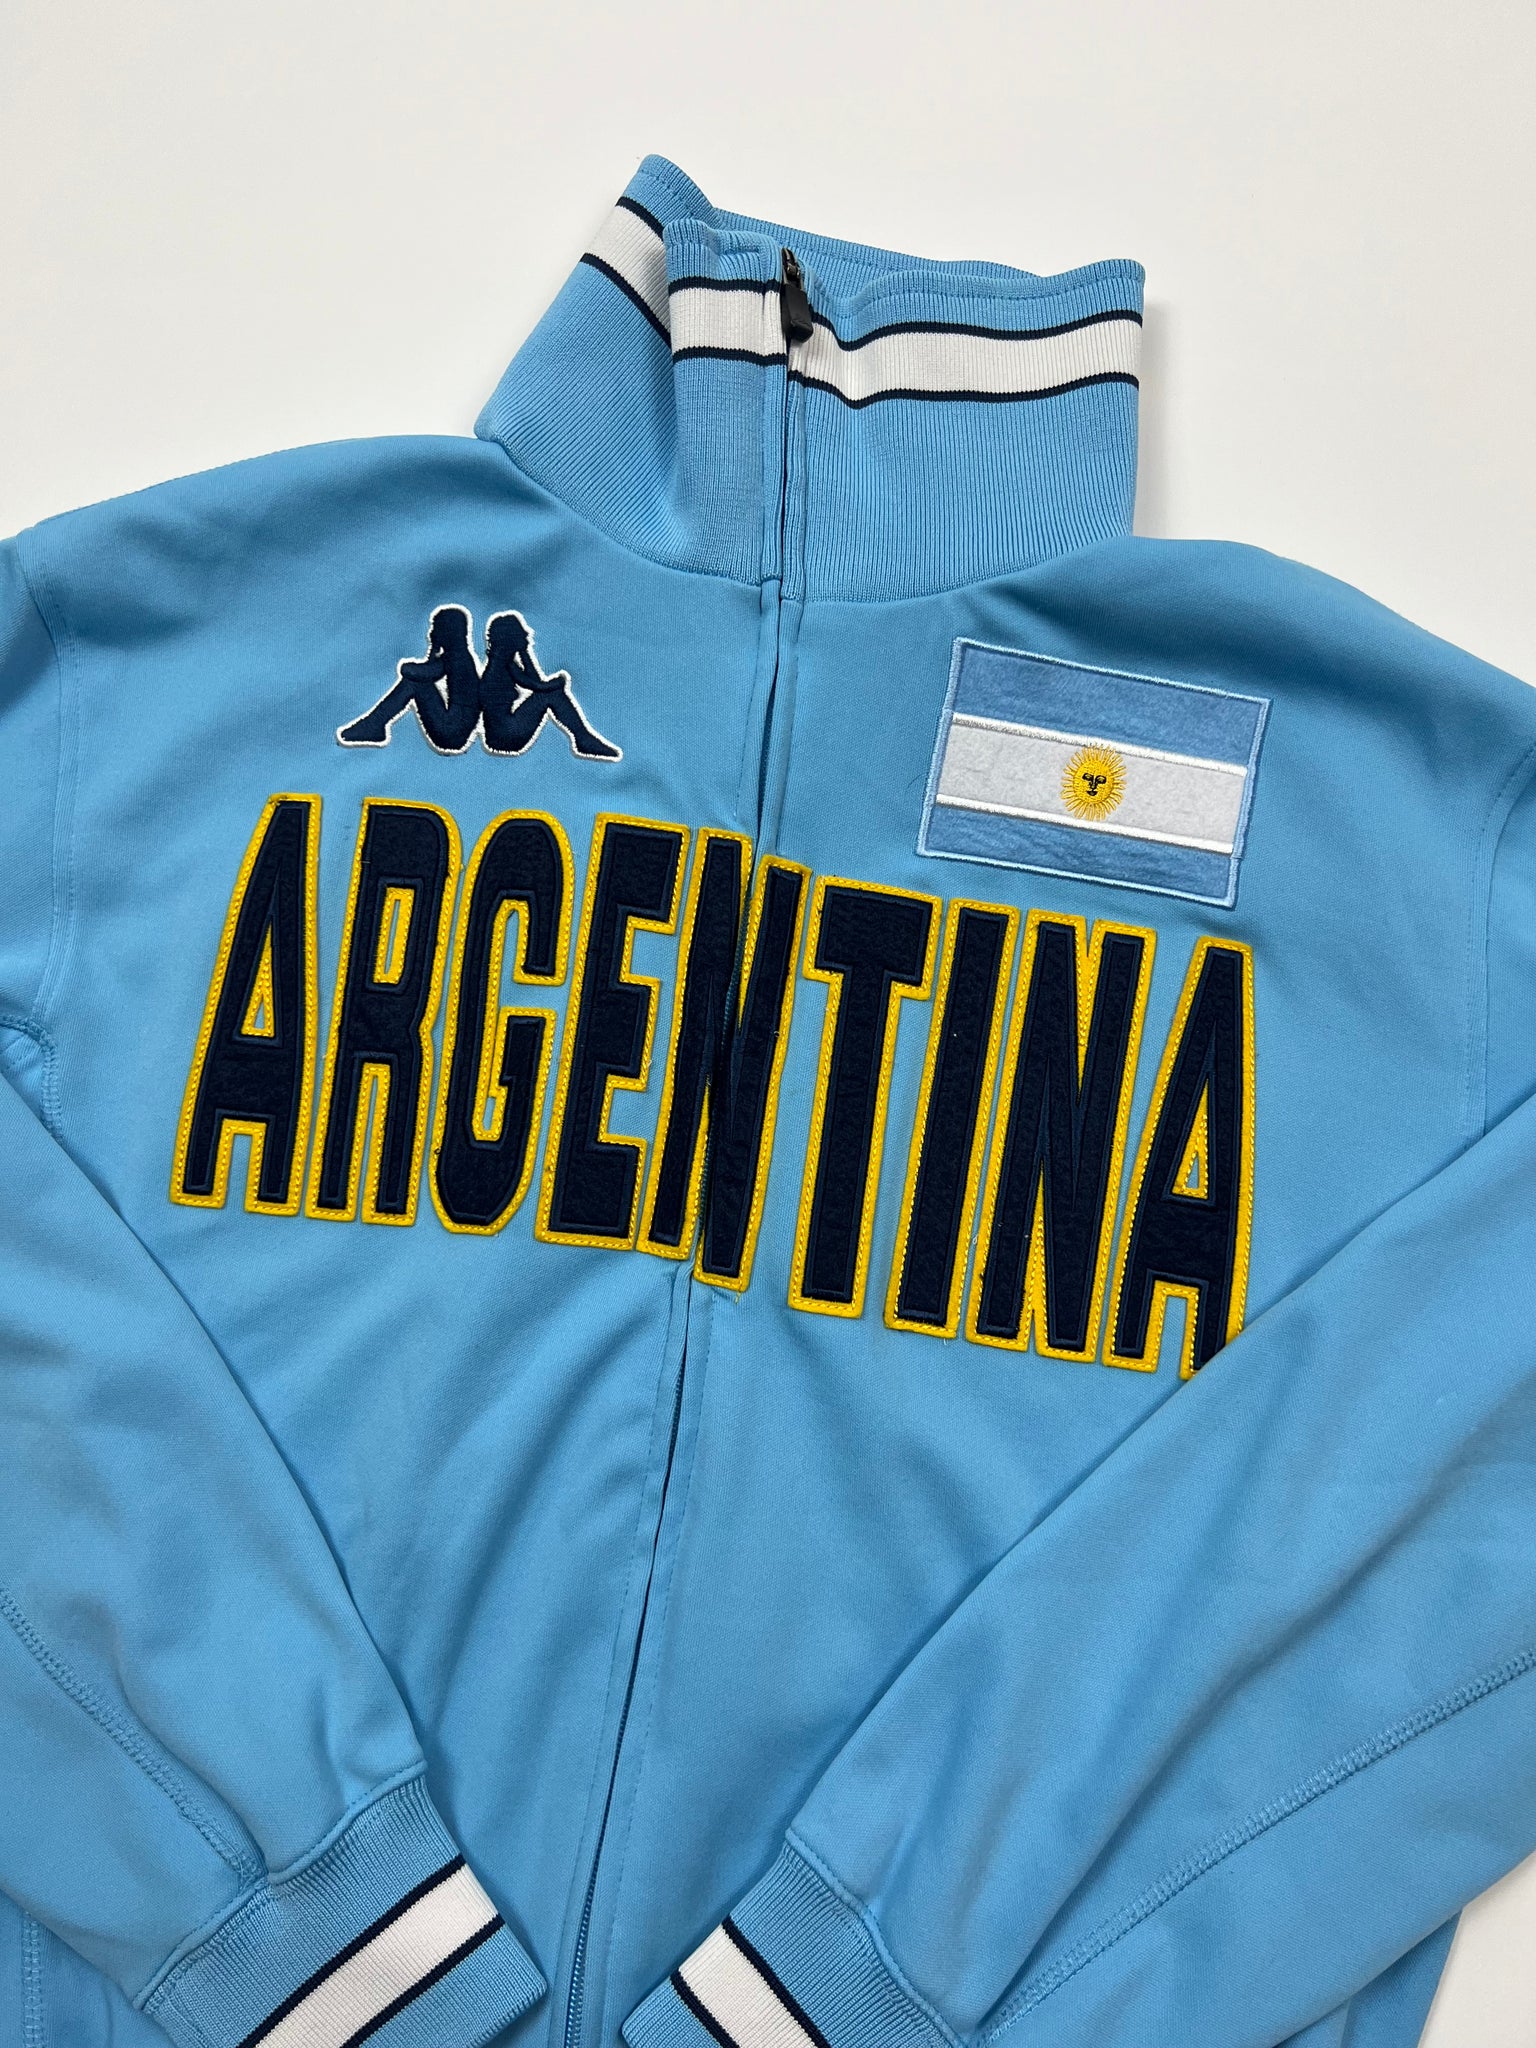 Kappa Argentina Track Jacket (M)